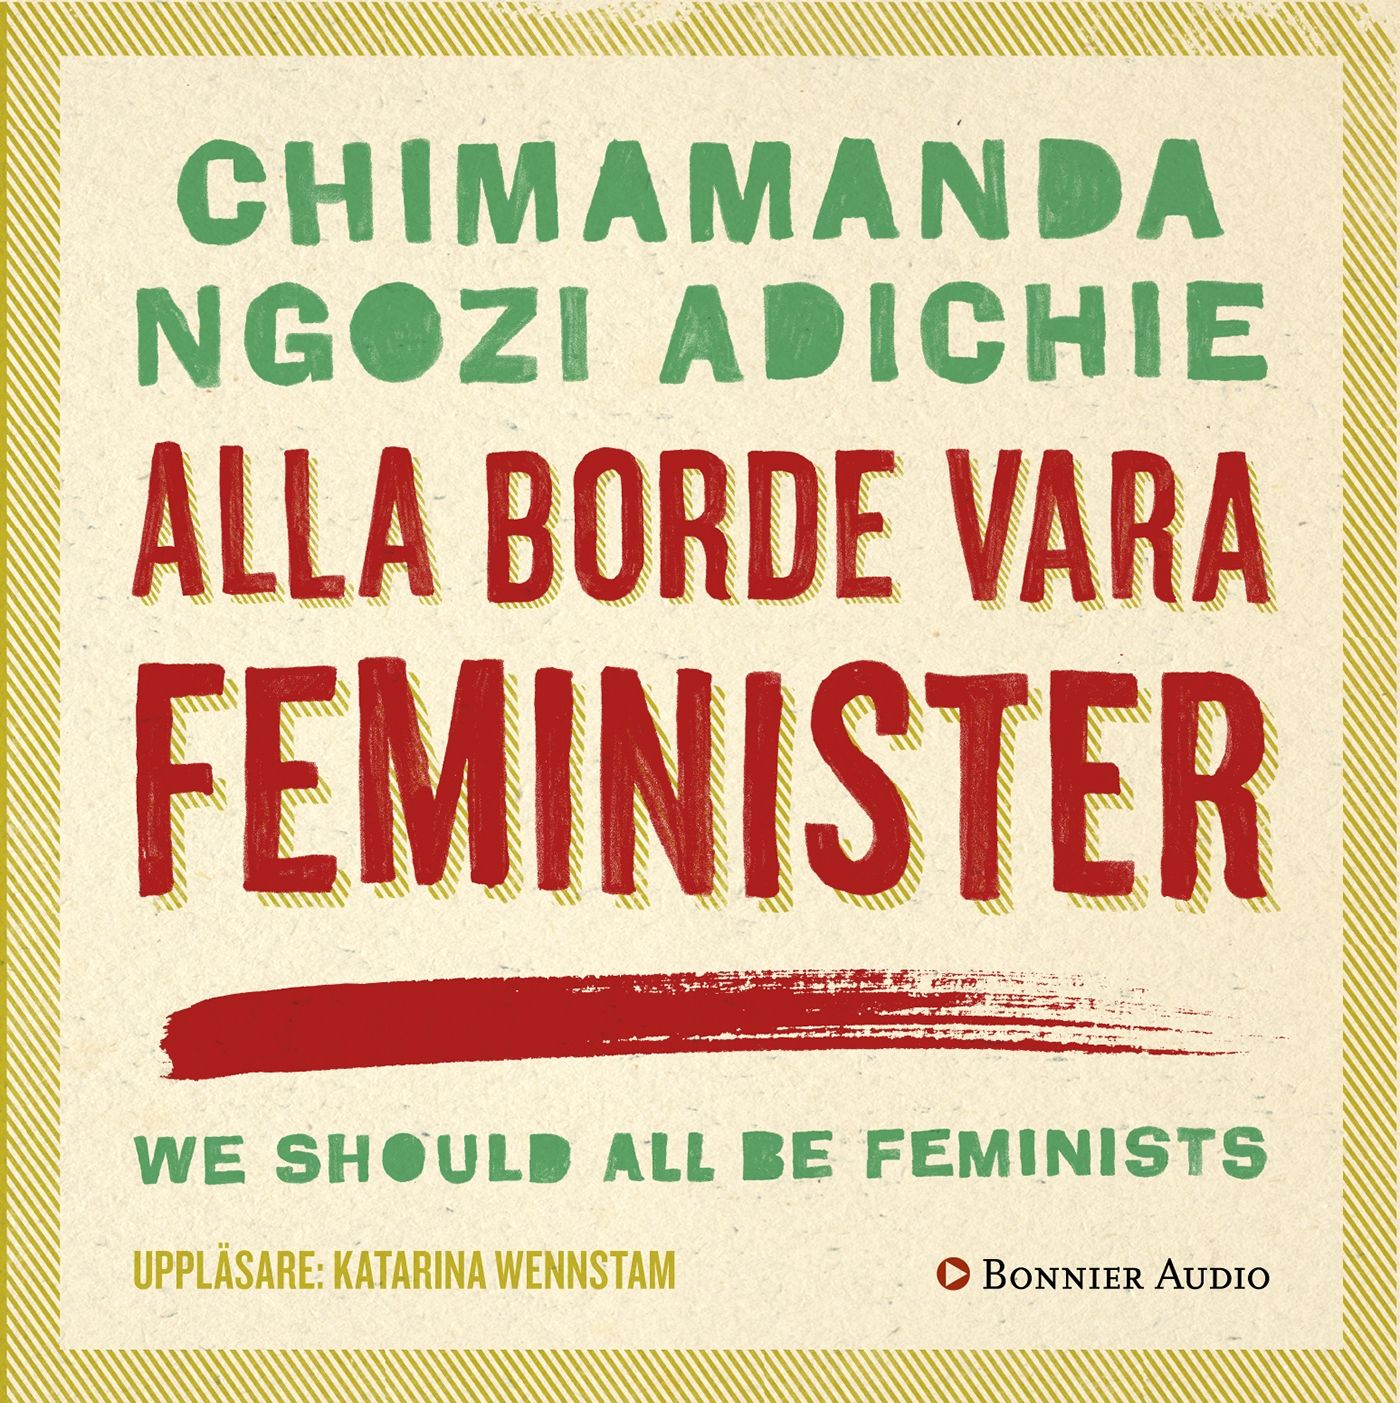 Alla borde vara feminister, audiobook by Chimamanda Ngozi Adichie